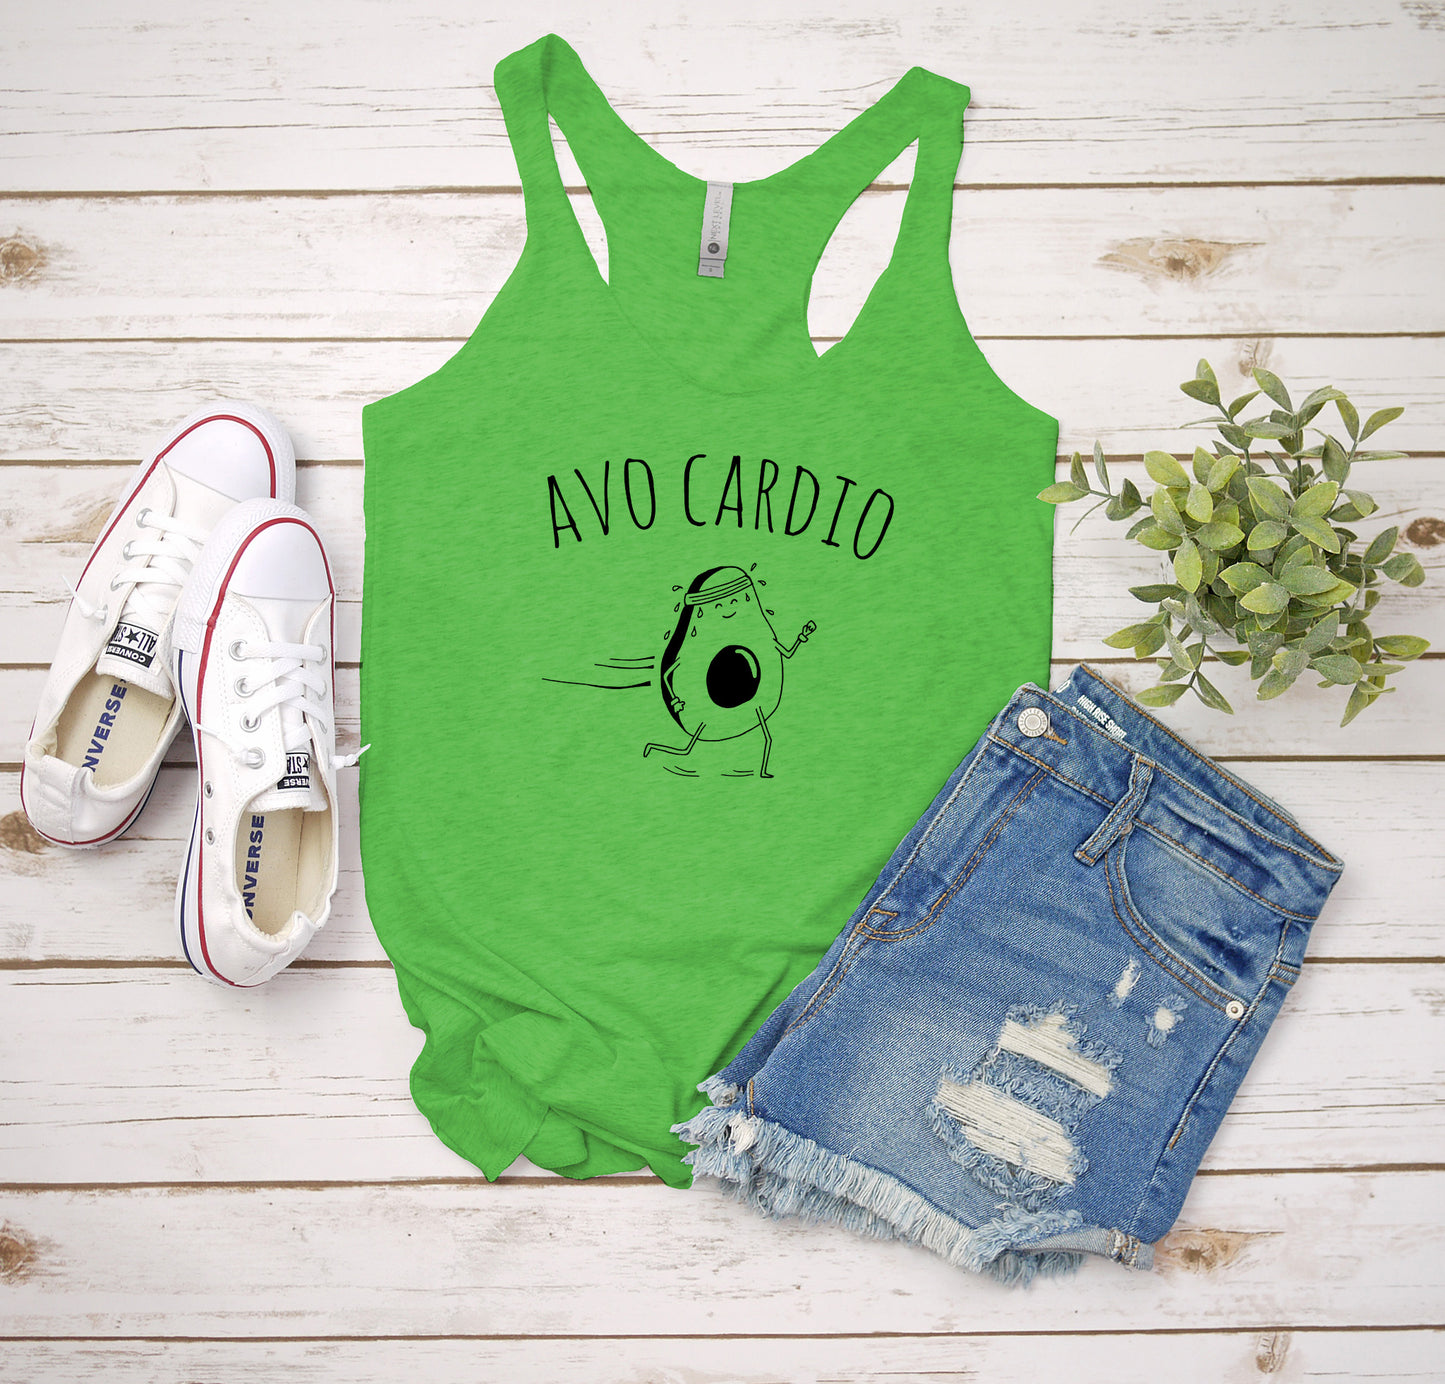 Avo Cardio (Avocado) - Women's Tank - Heather Gray, Tahiti, or Envy